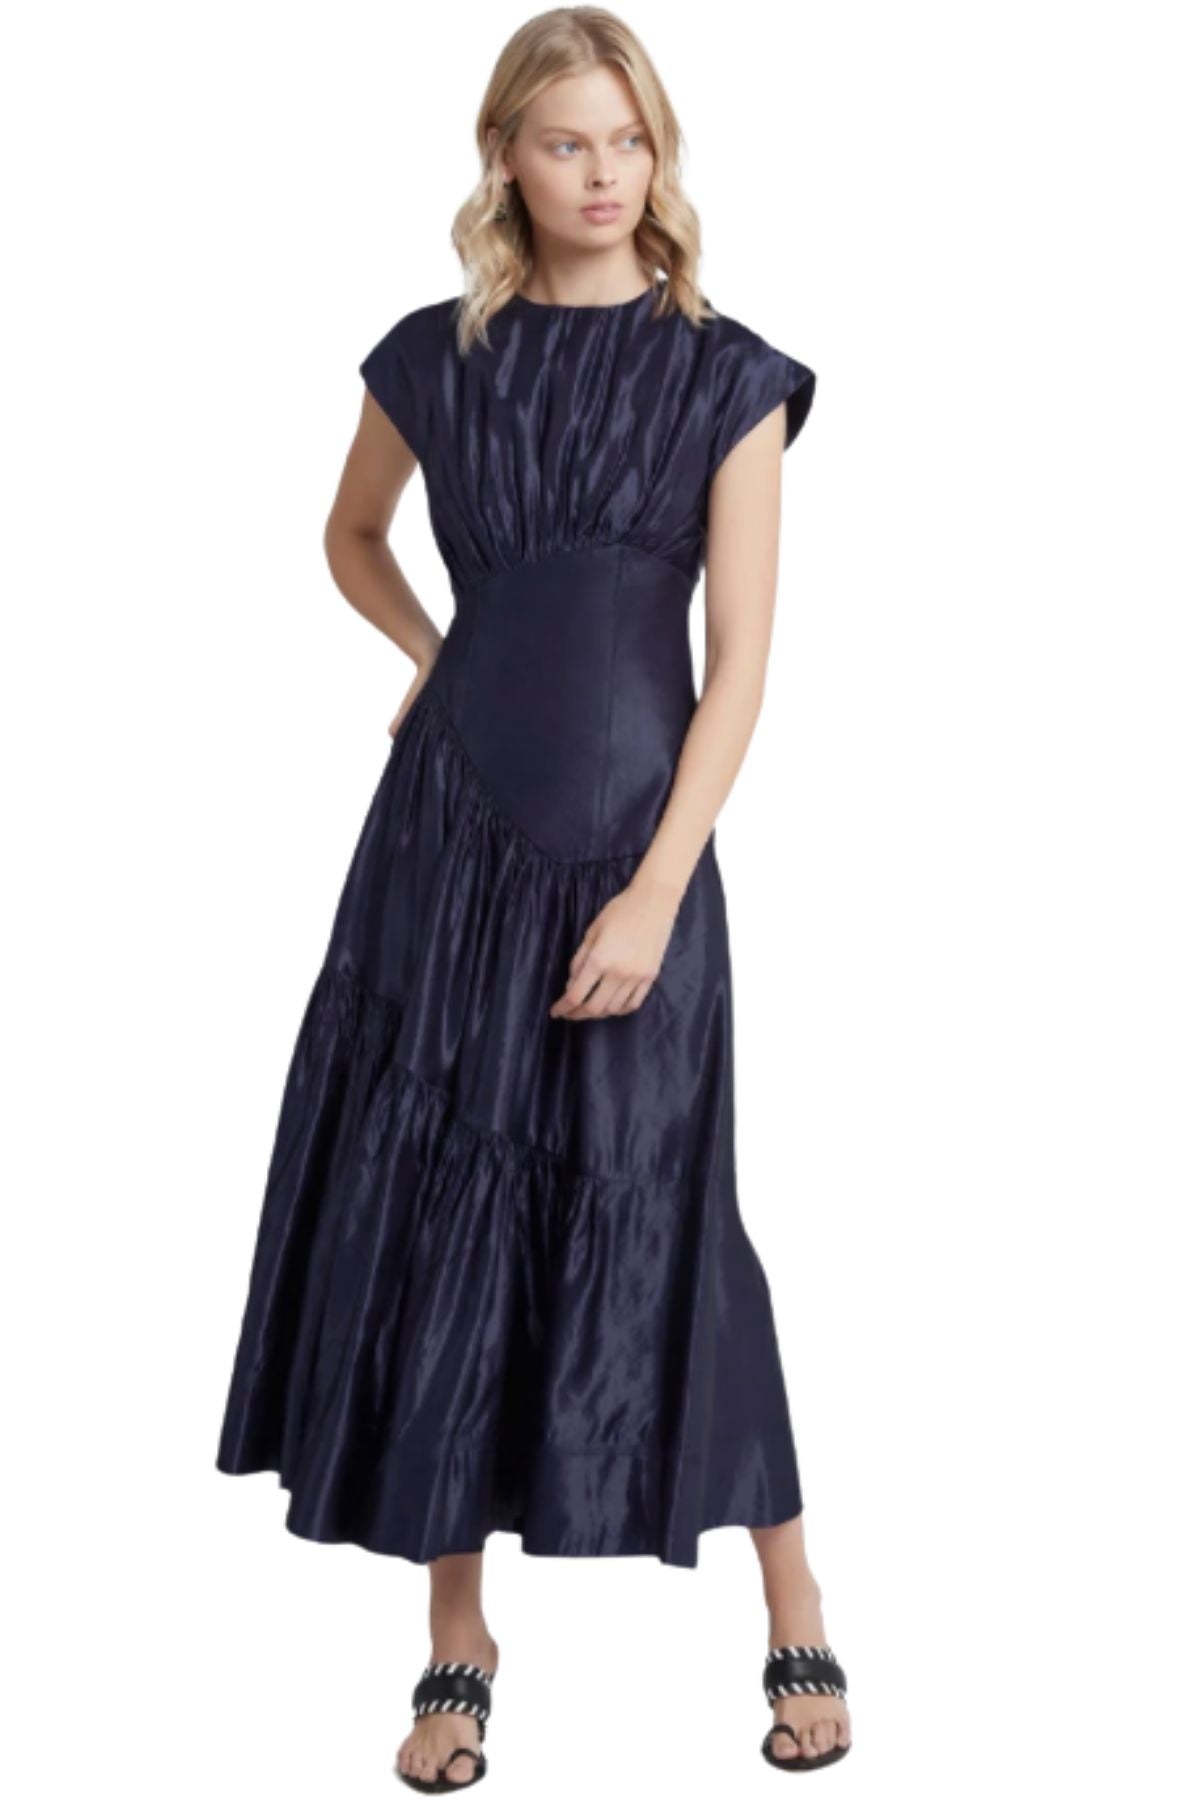 Aje AJE Serendipity Reflection Midi Dress (Navy Blue) - RRP $595 - 1_a4d28808-4f4b-4fb9-8848-11b378ef5f68.jpg